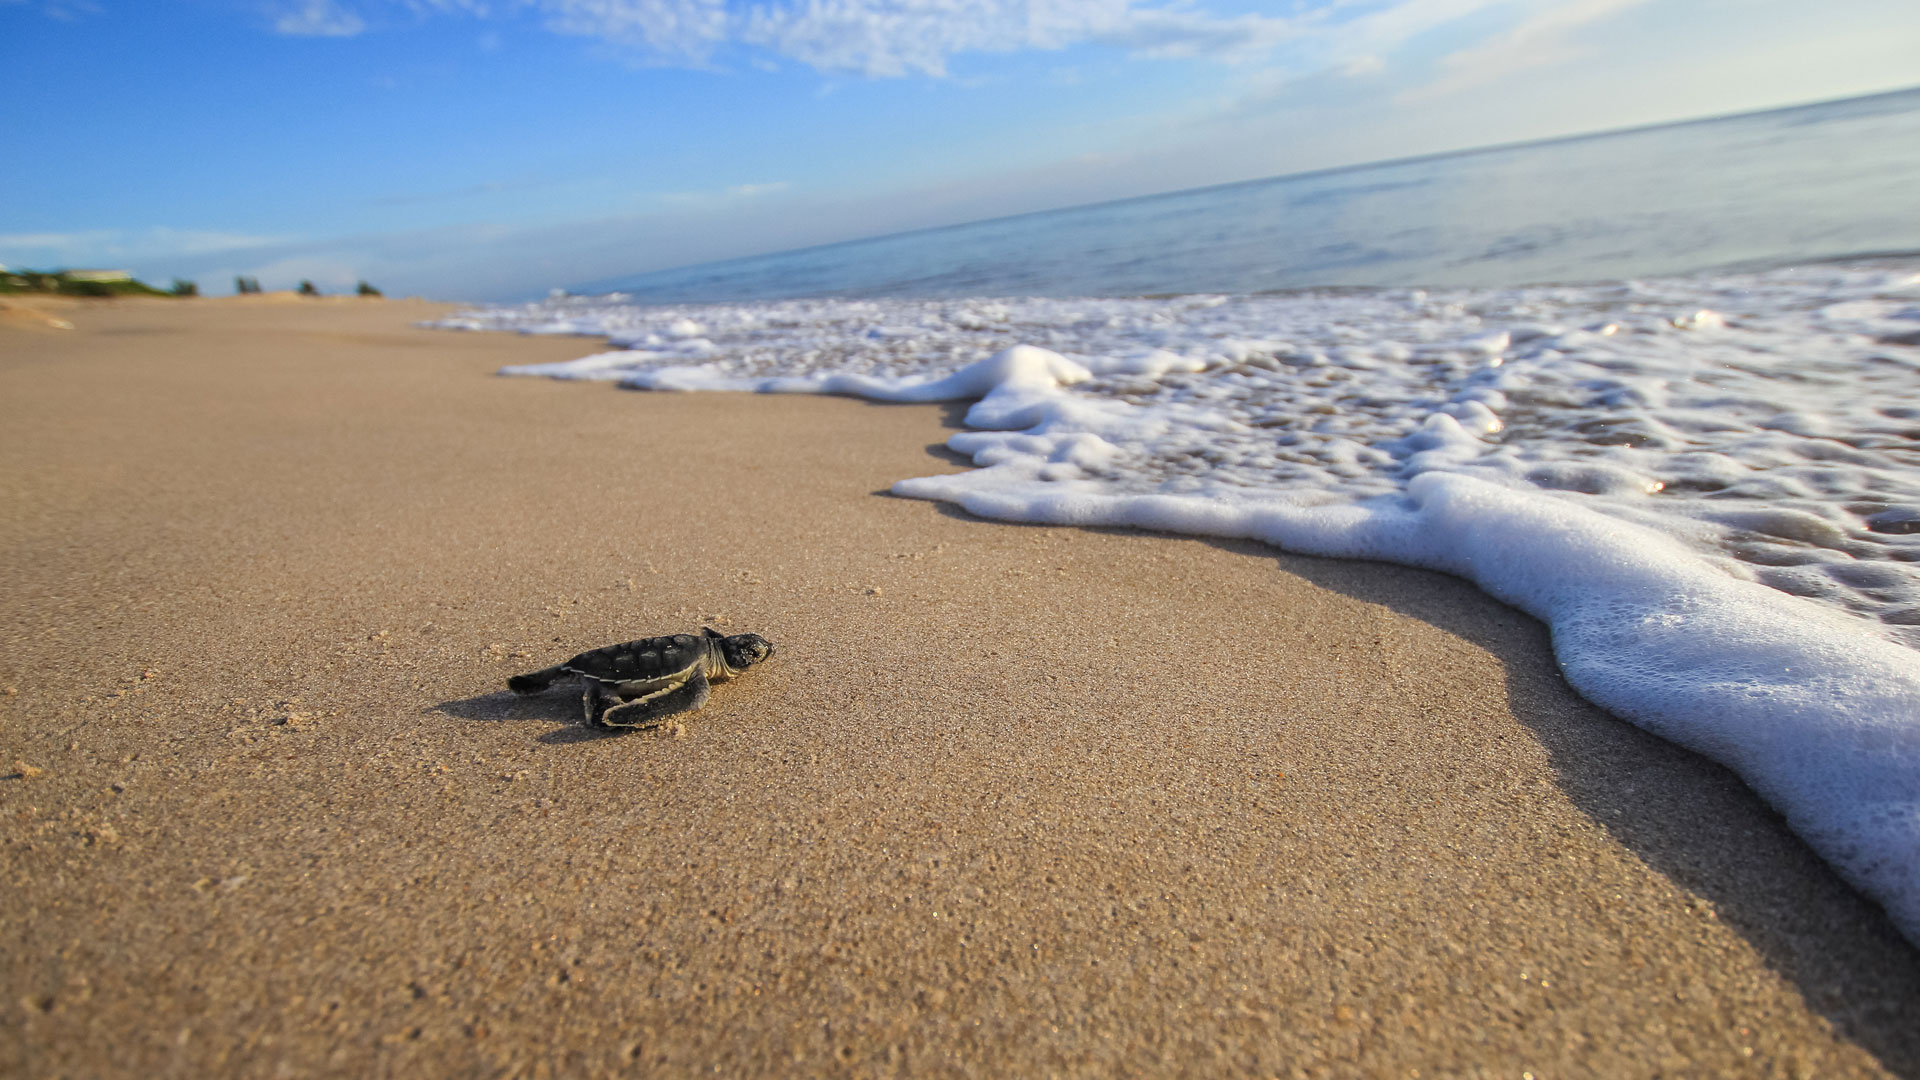 Sea turtle nesting season underway | wtsp.com